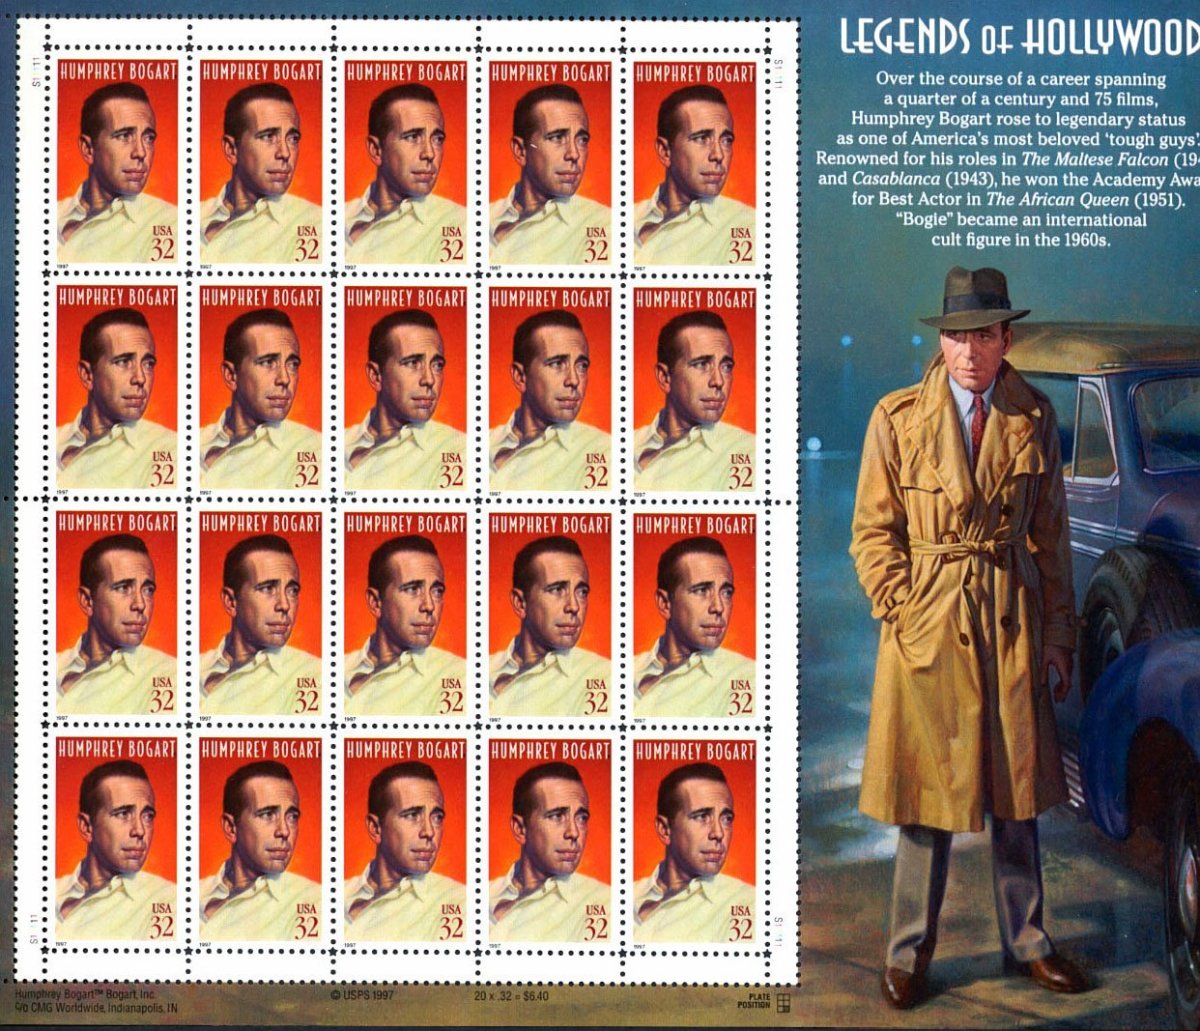 Legends of Hollywood Stamp Series - HobbyLark